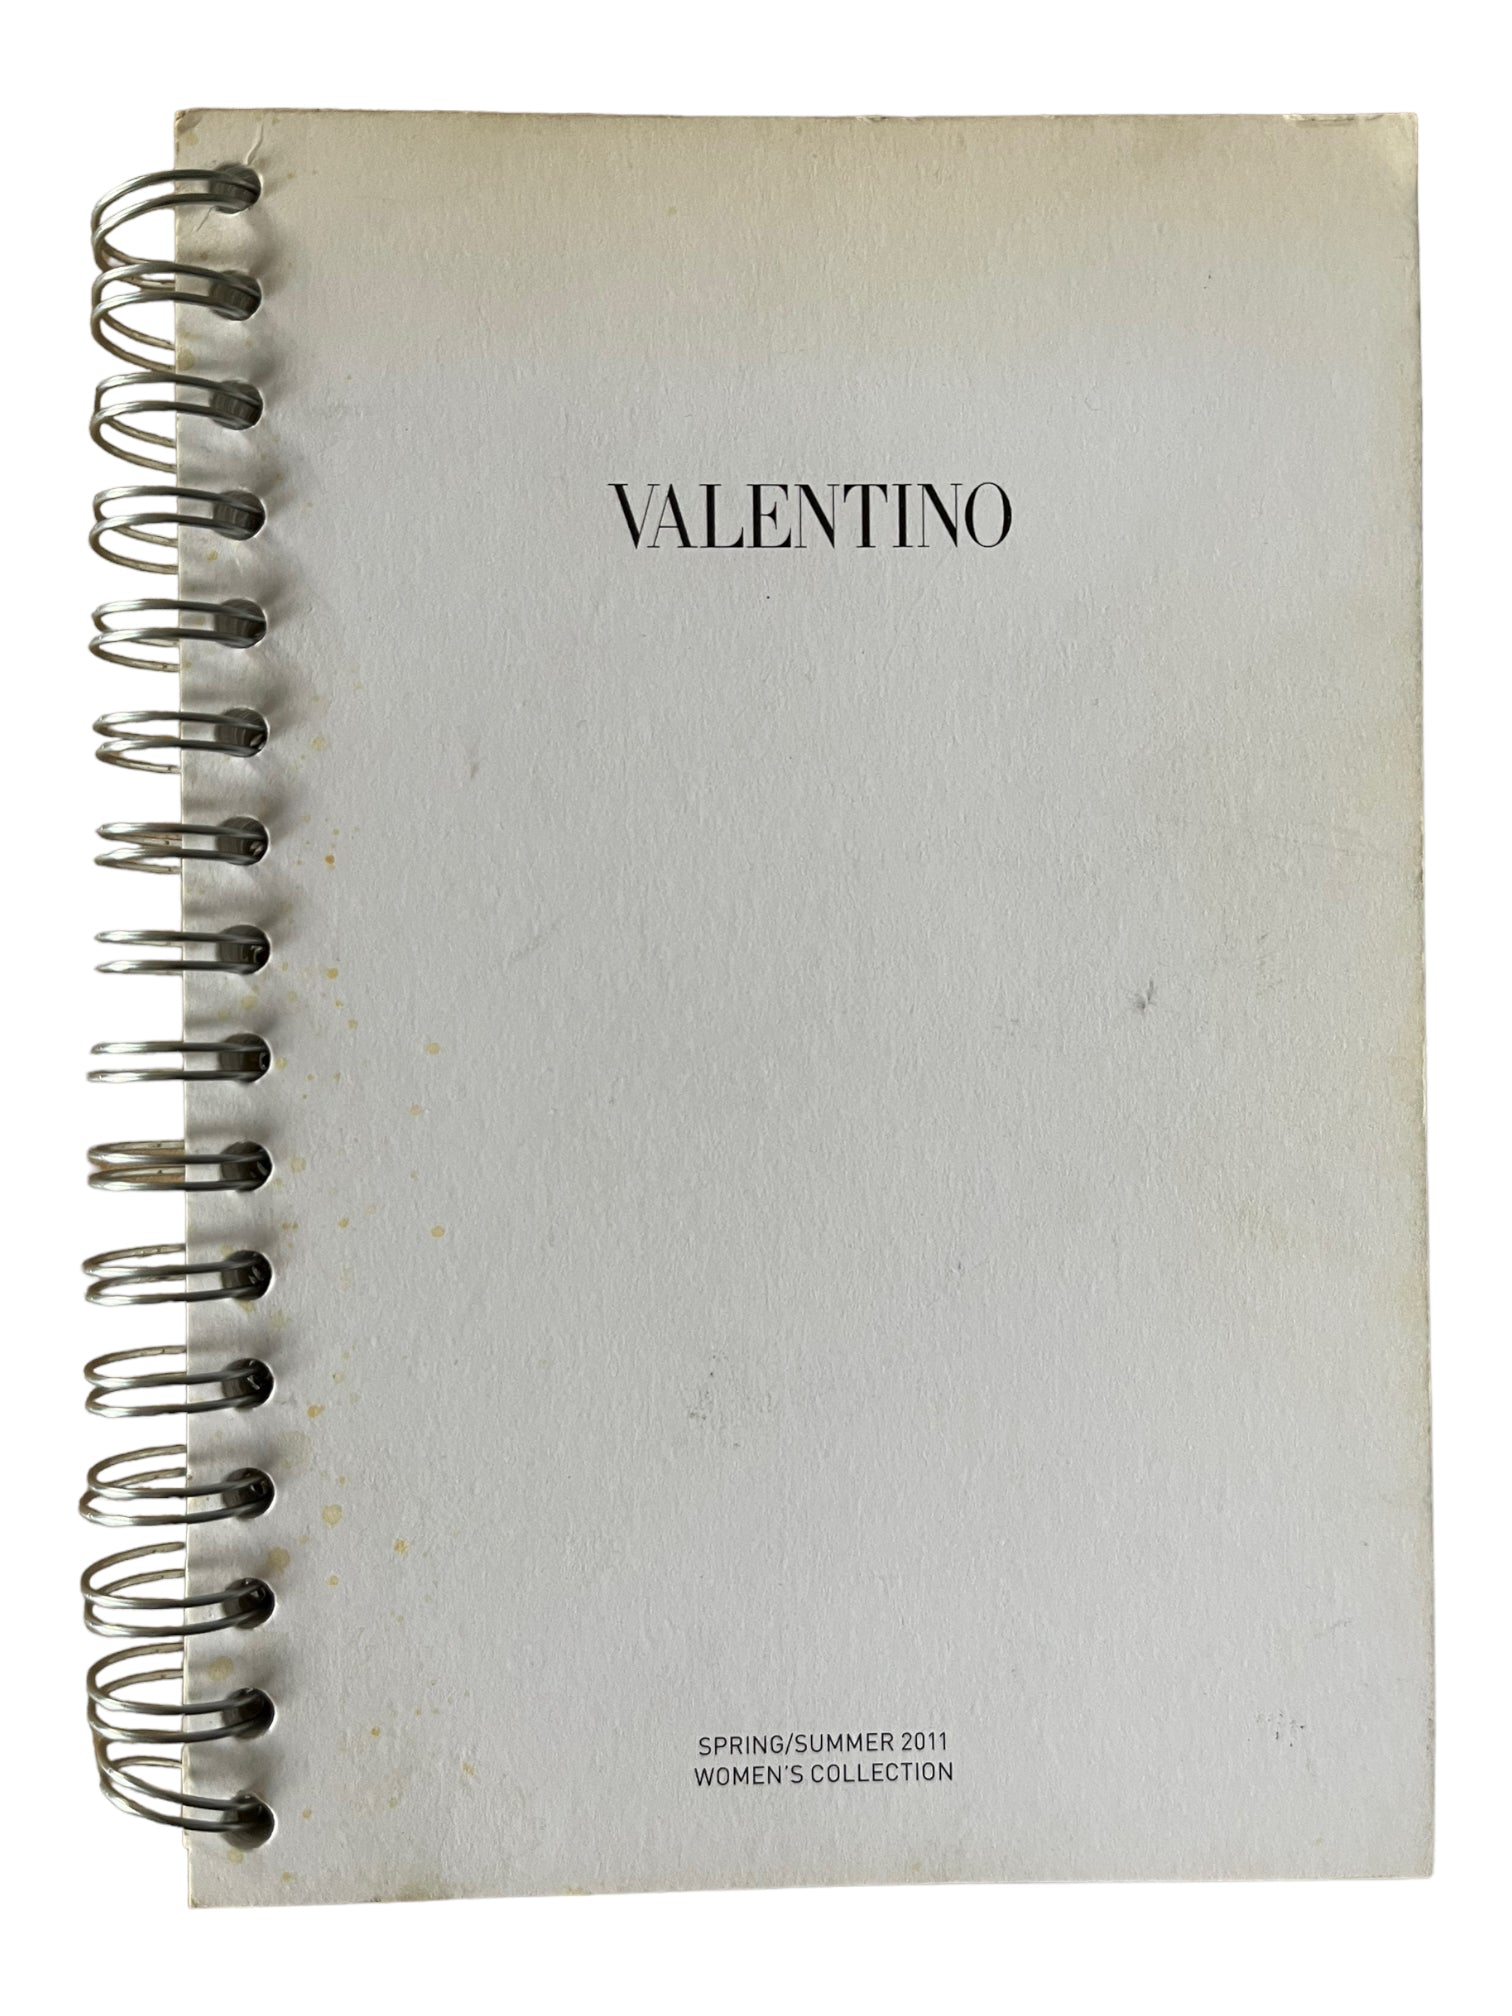 Valentino S/S11 lookbook